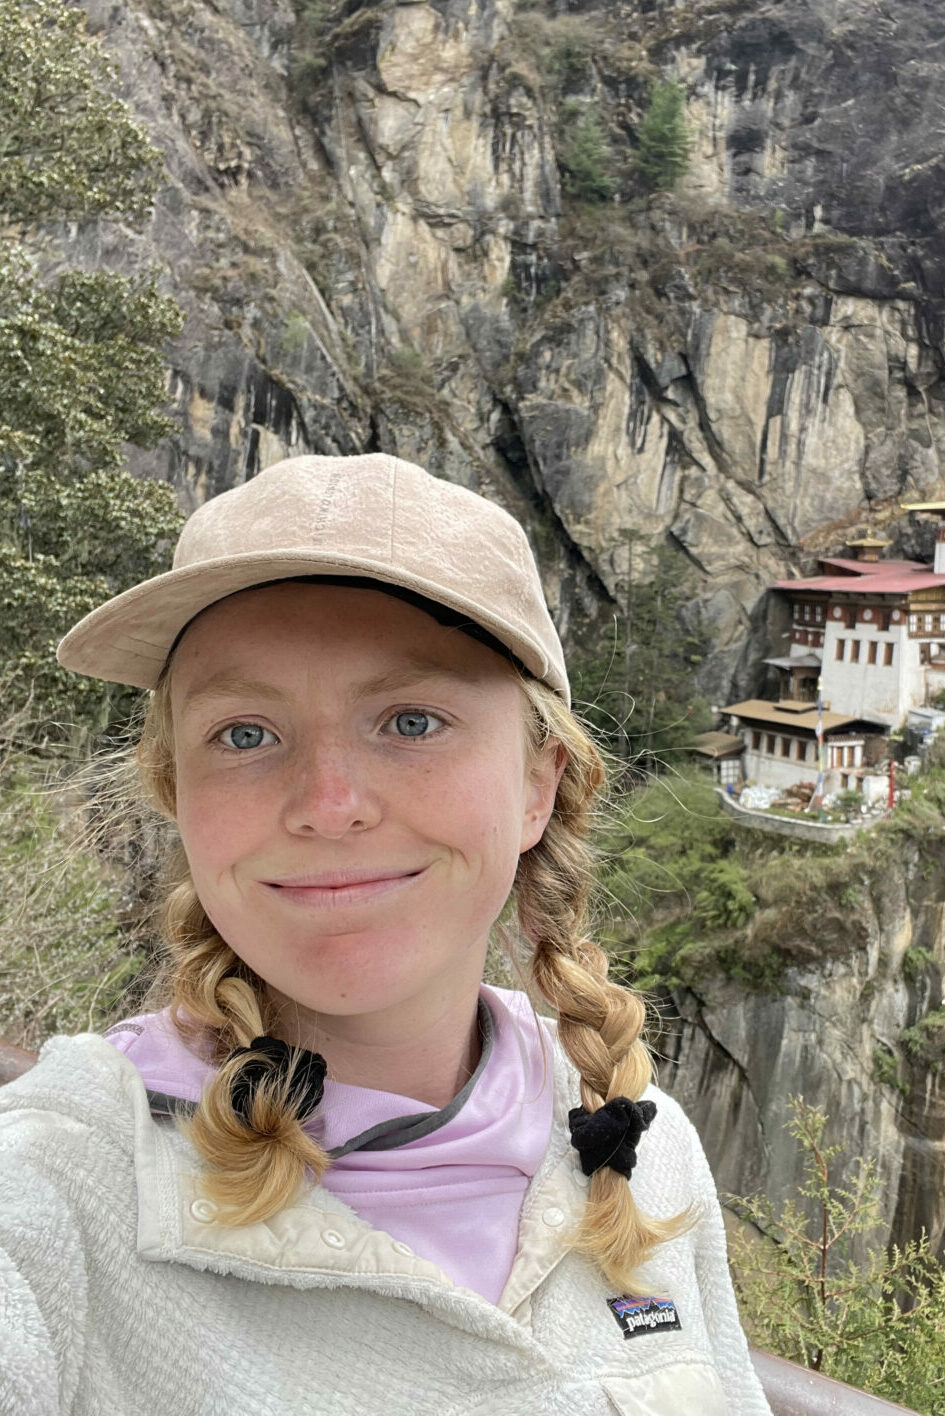 Washington teen hiking trip leader Ellie Bridgers